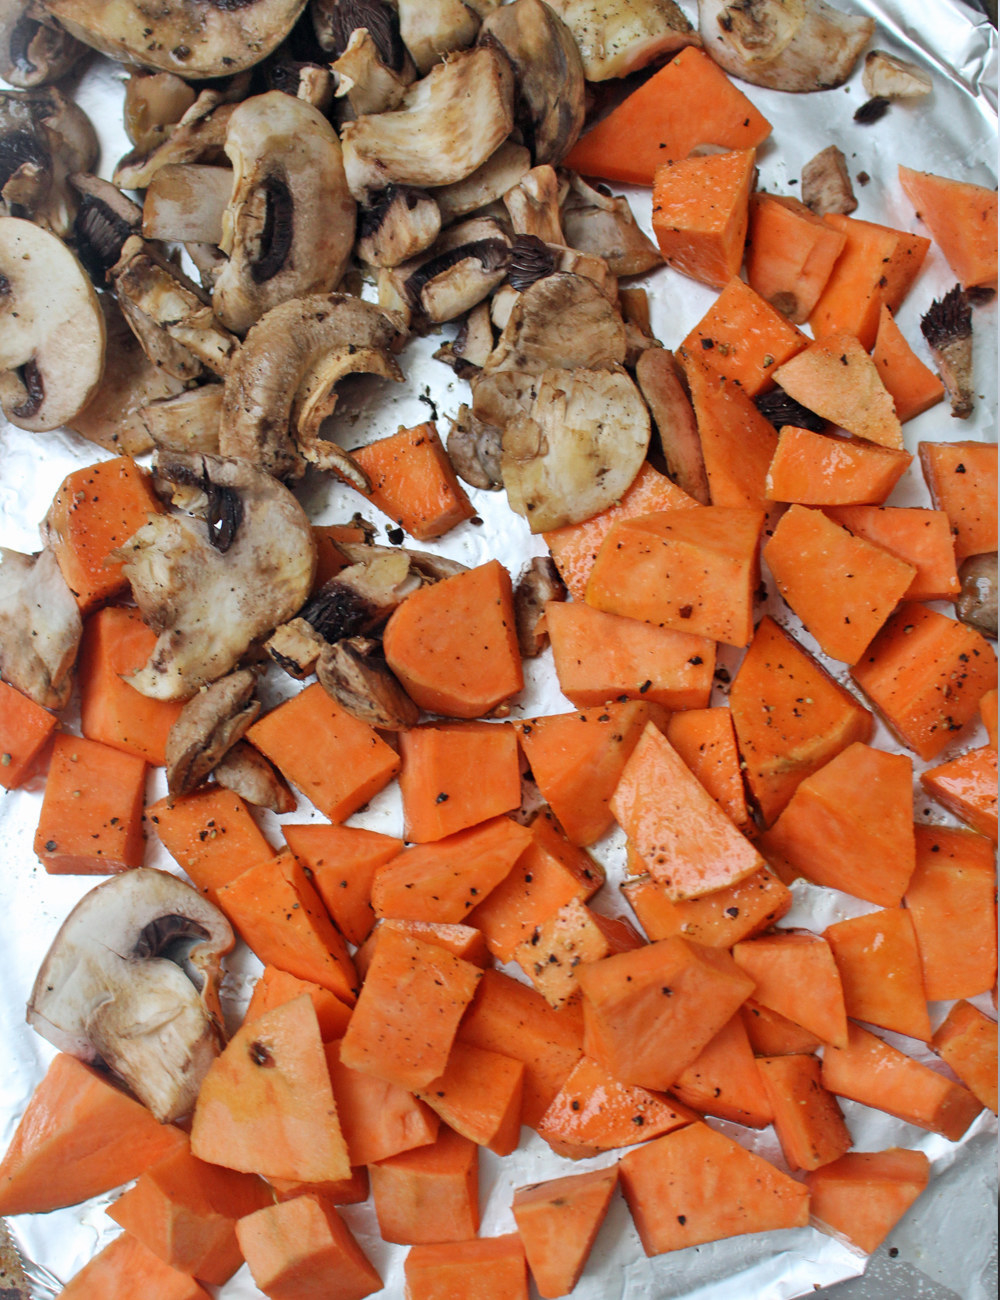 Chopped mushrooms and sweet potato